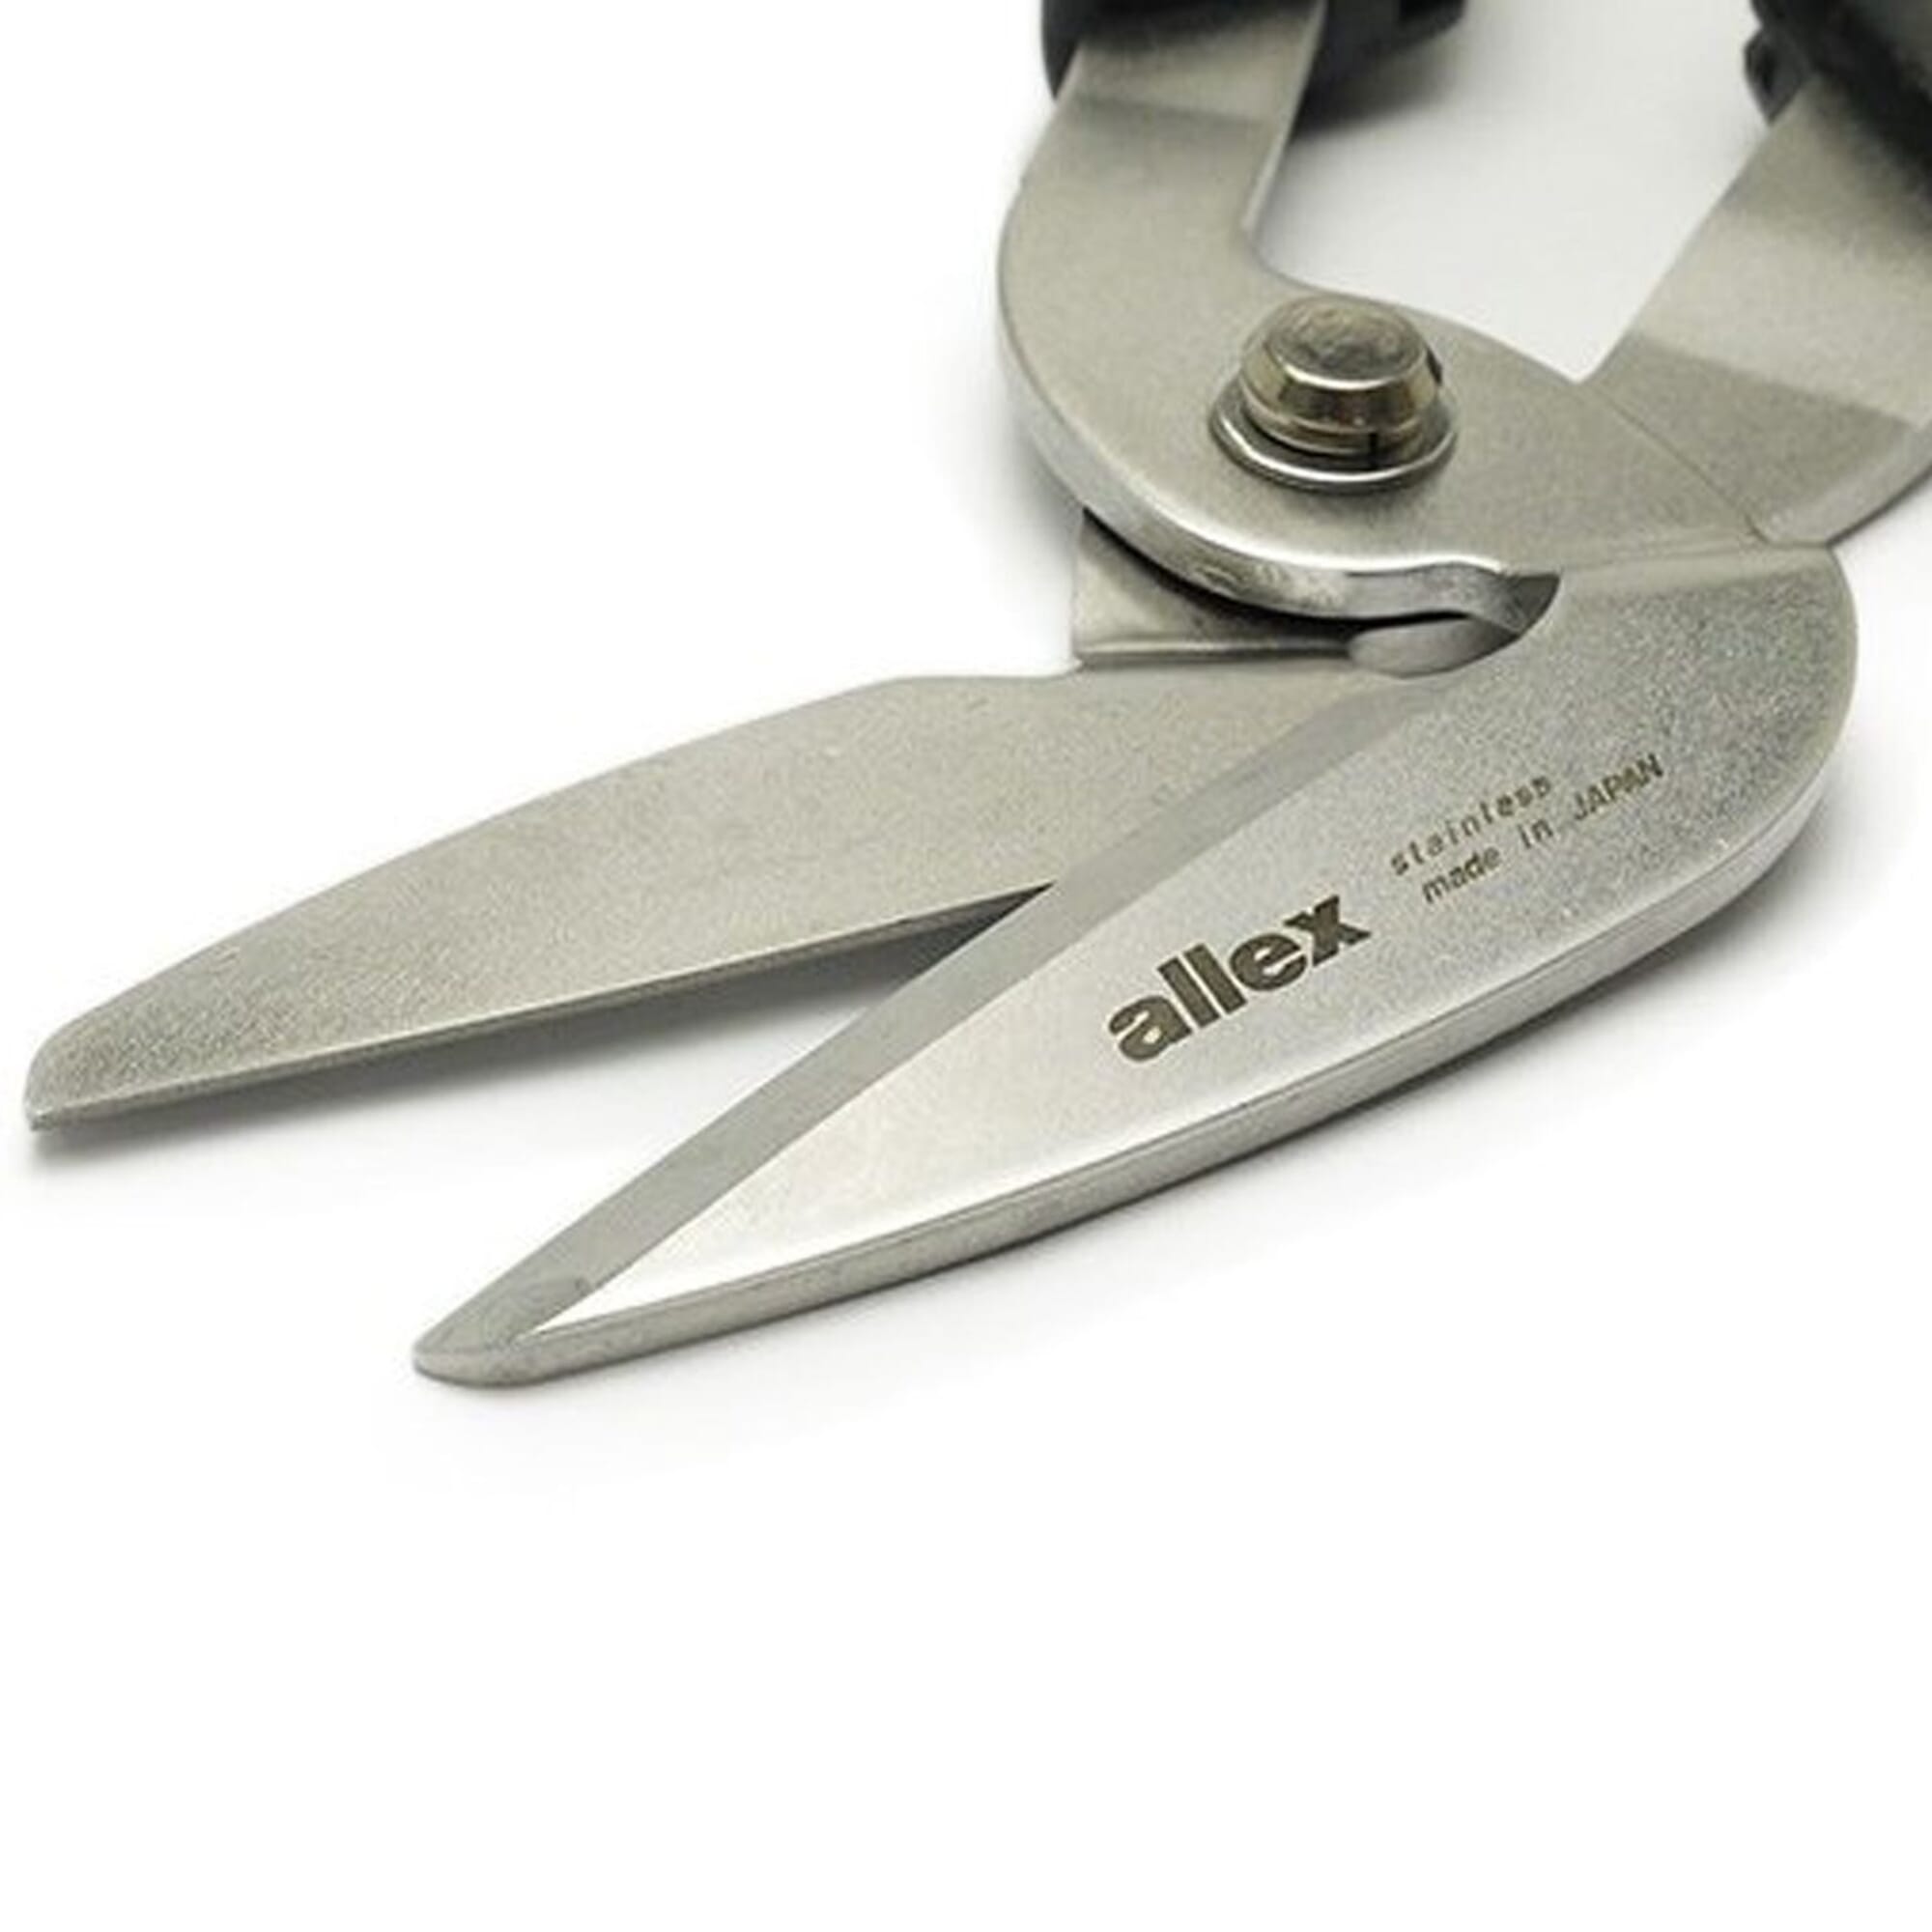 Allex Super Hard Scissors SH-1 Stainless Steel General Purpose